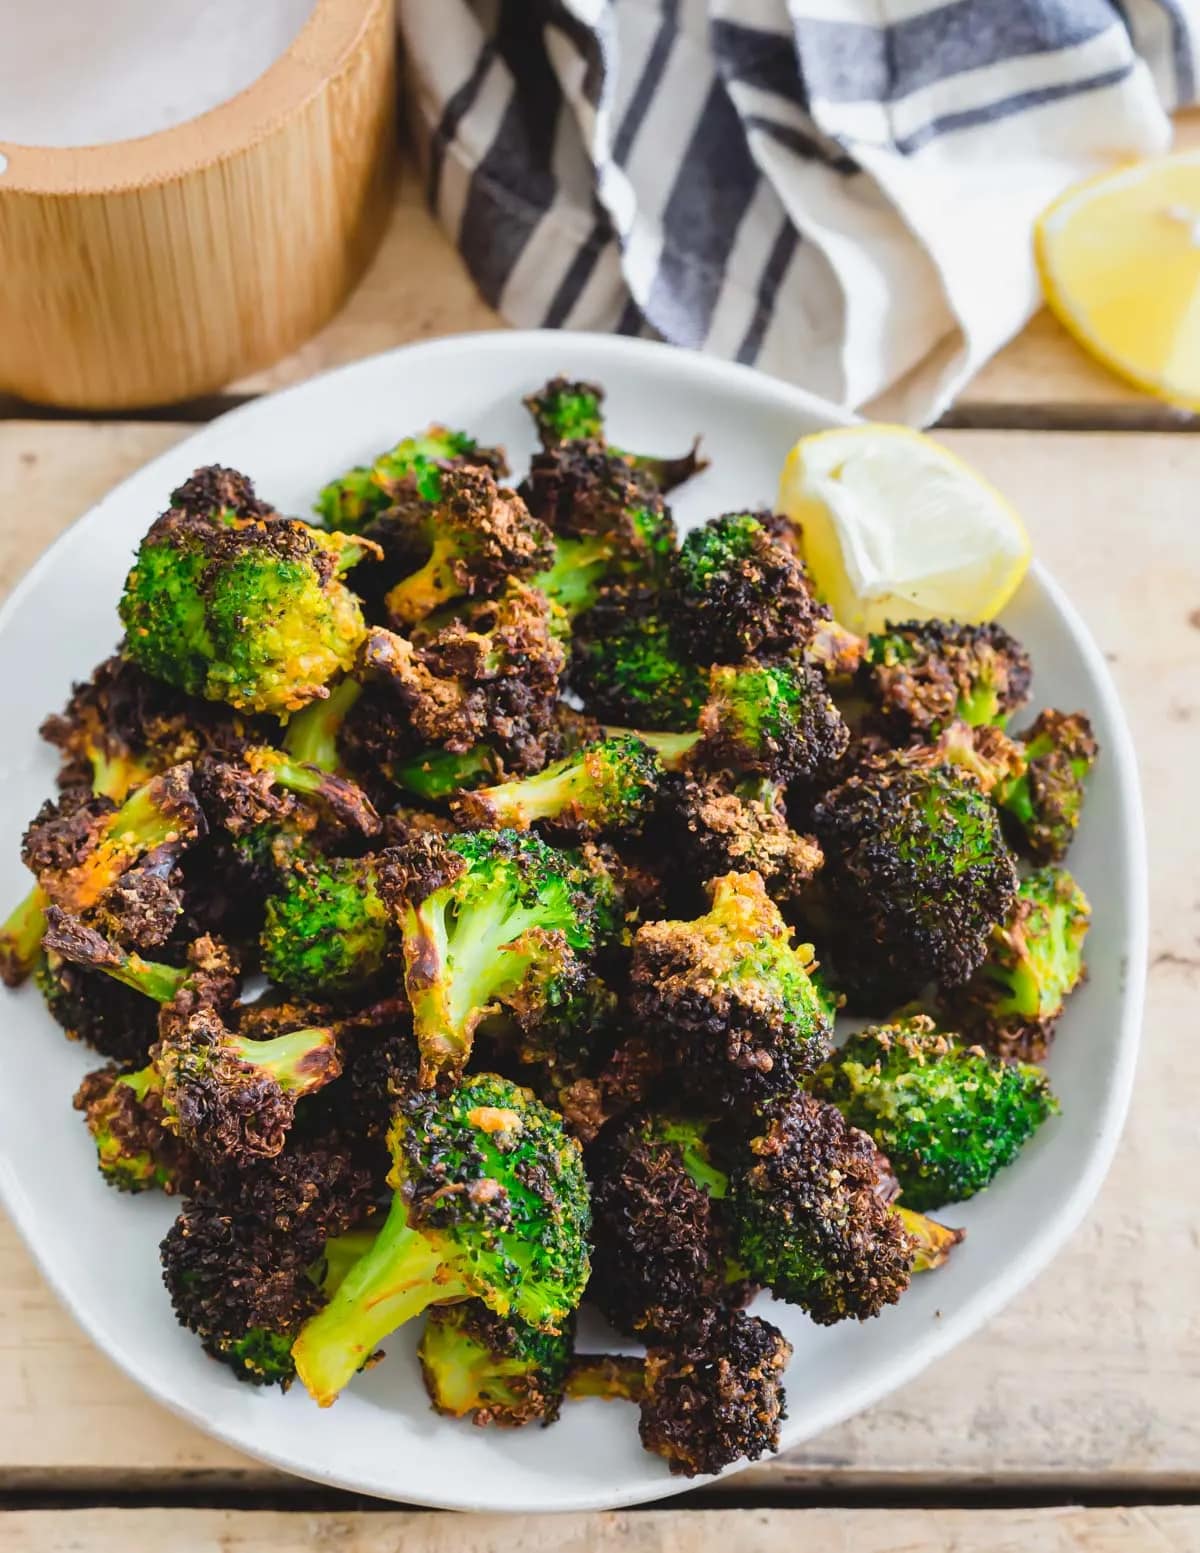 Crispy turmeric air fryer frozen broccoli